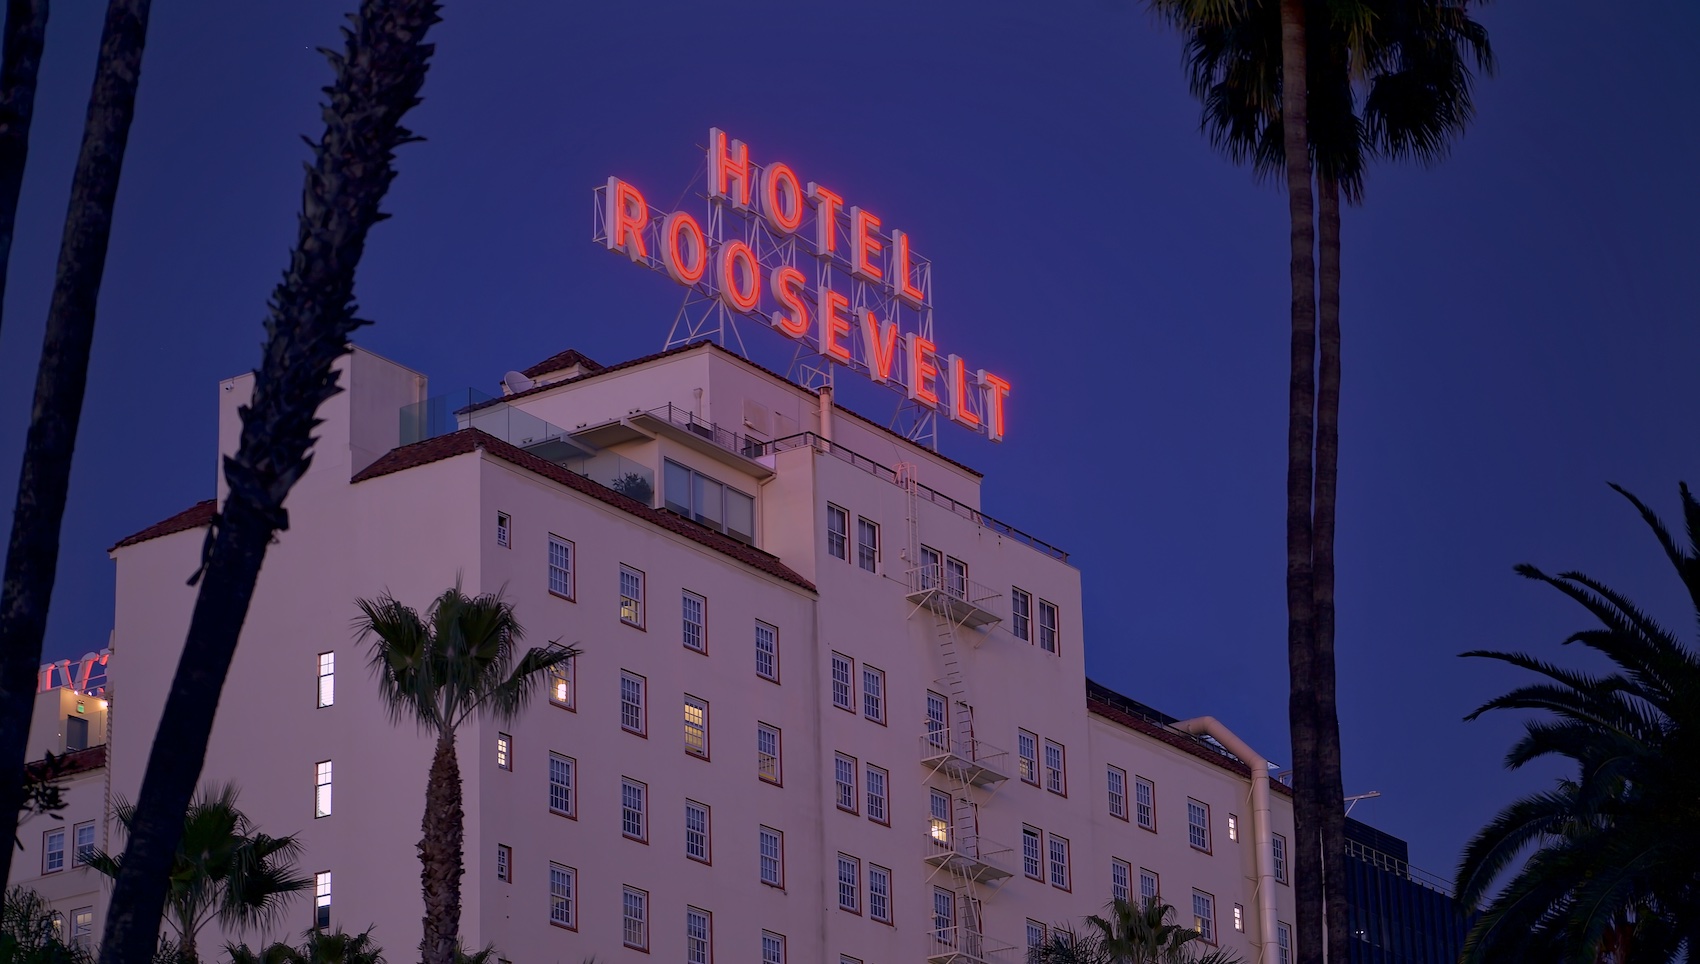 Hollywood Roosevelt